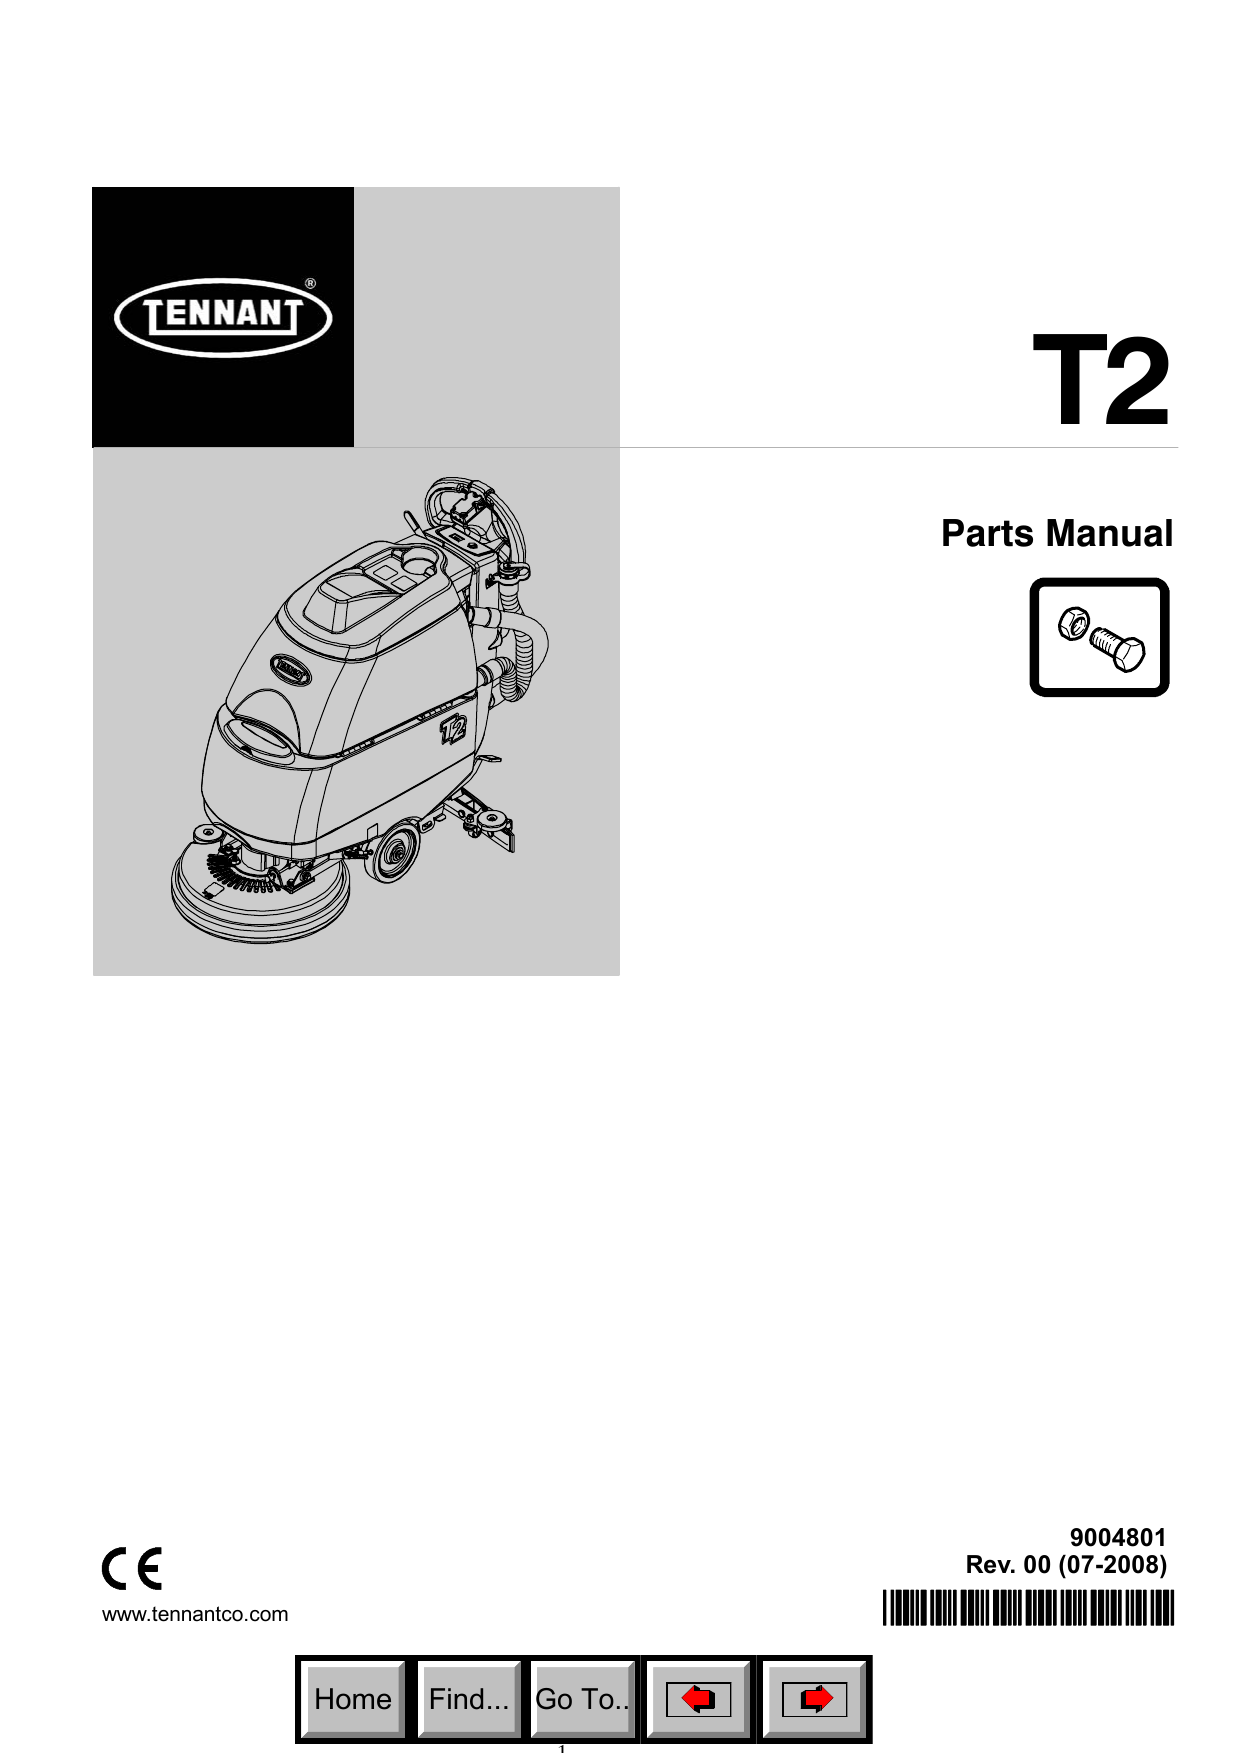 Tennant Ce T2 Parts Manualzz